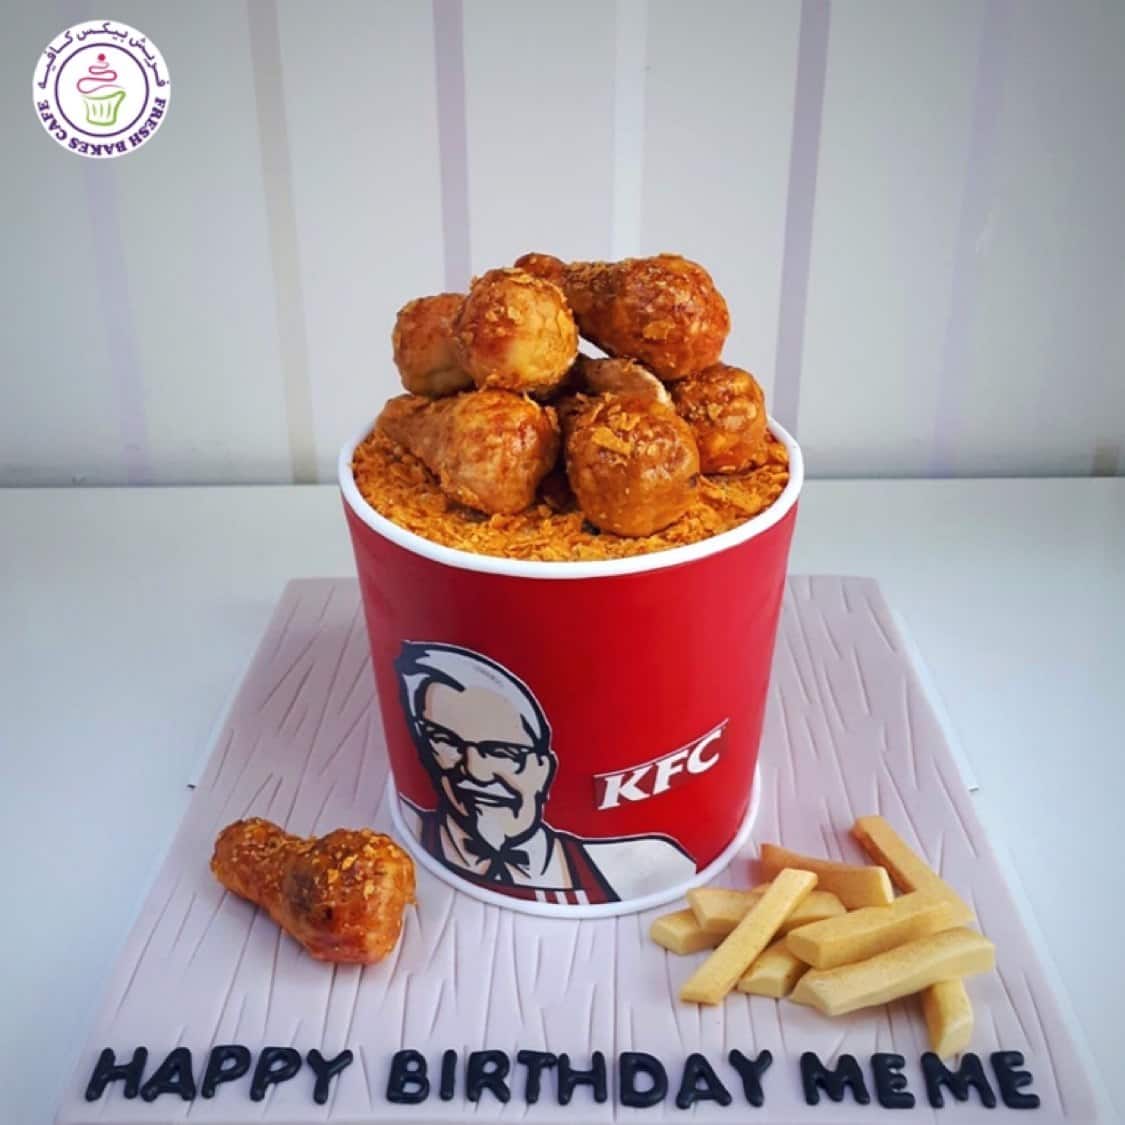 fried chicken birthday meme